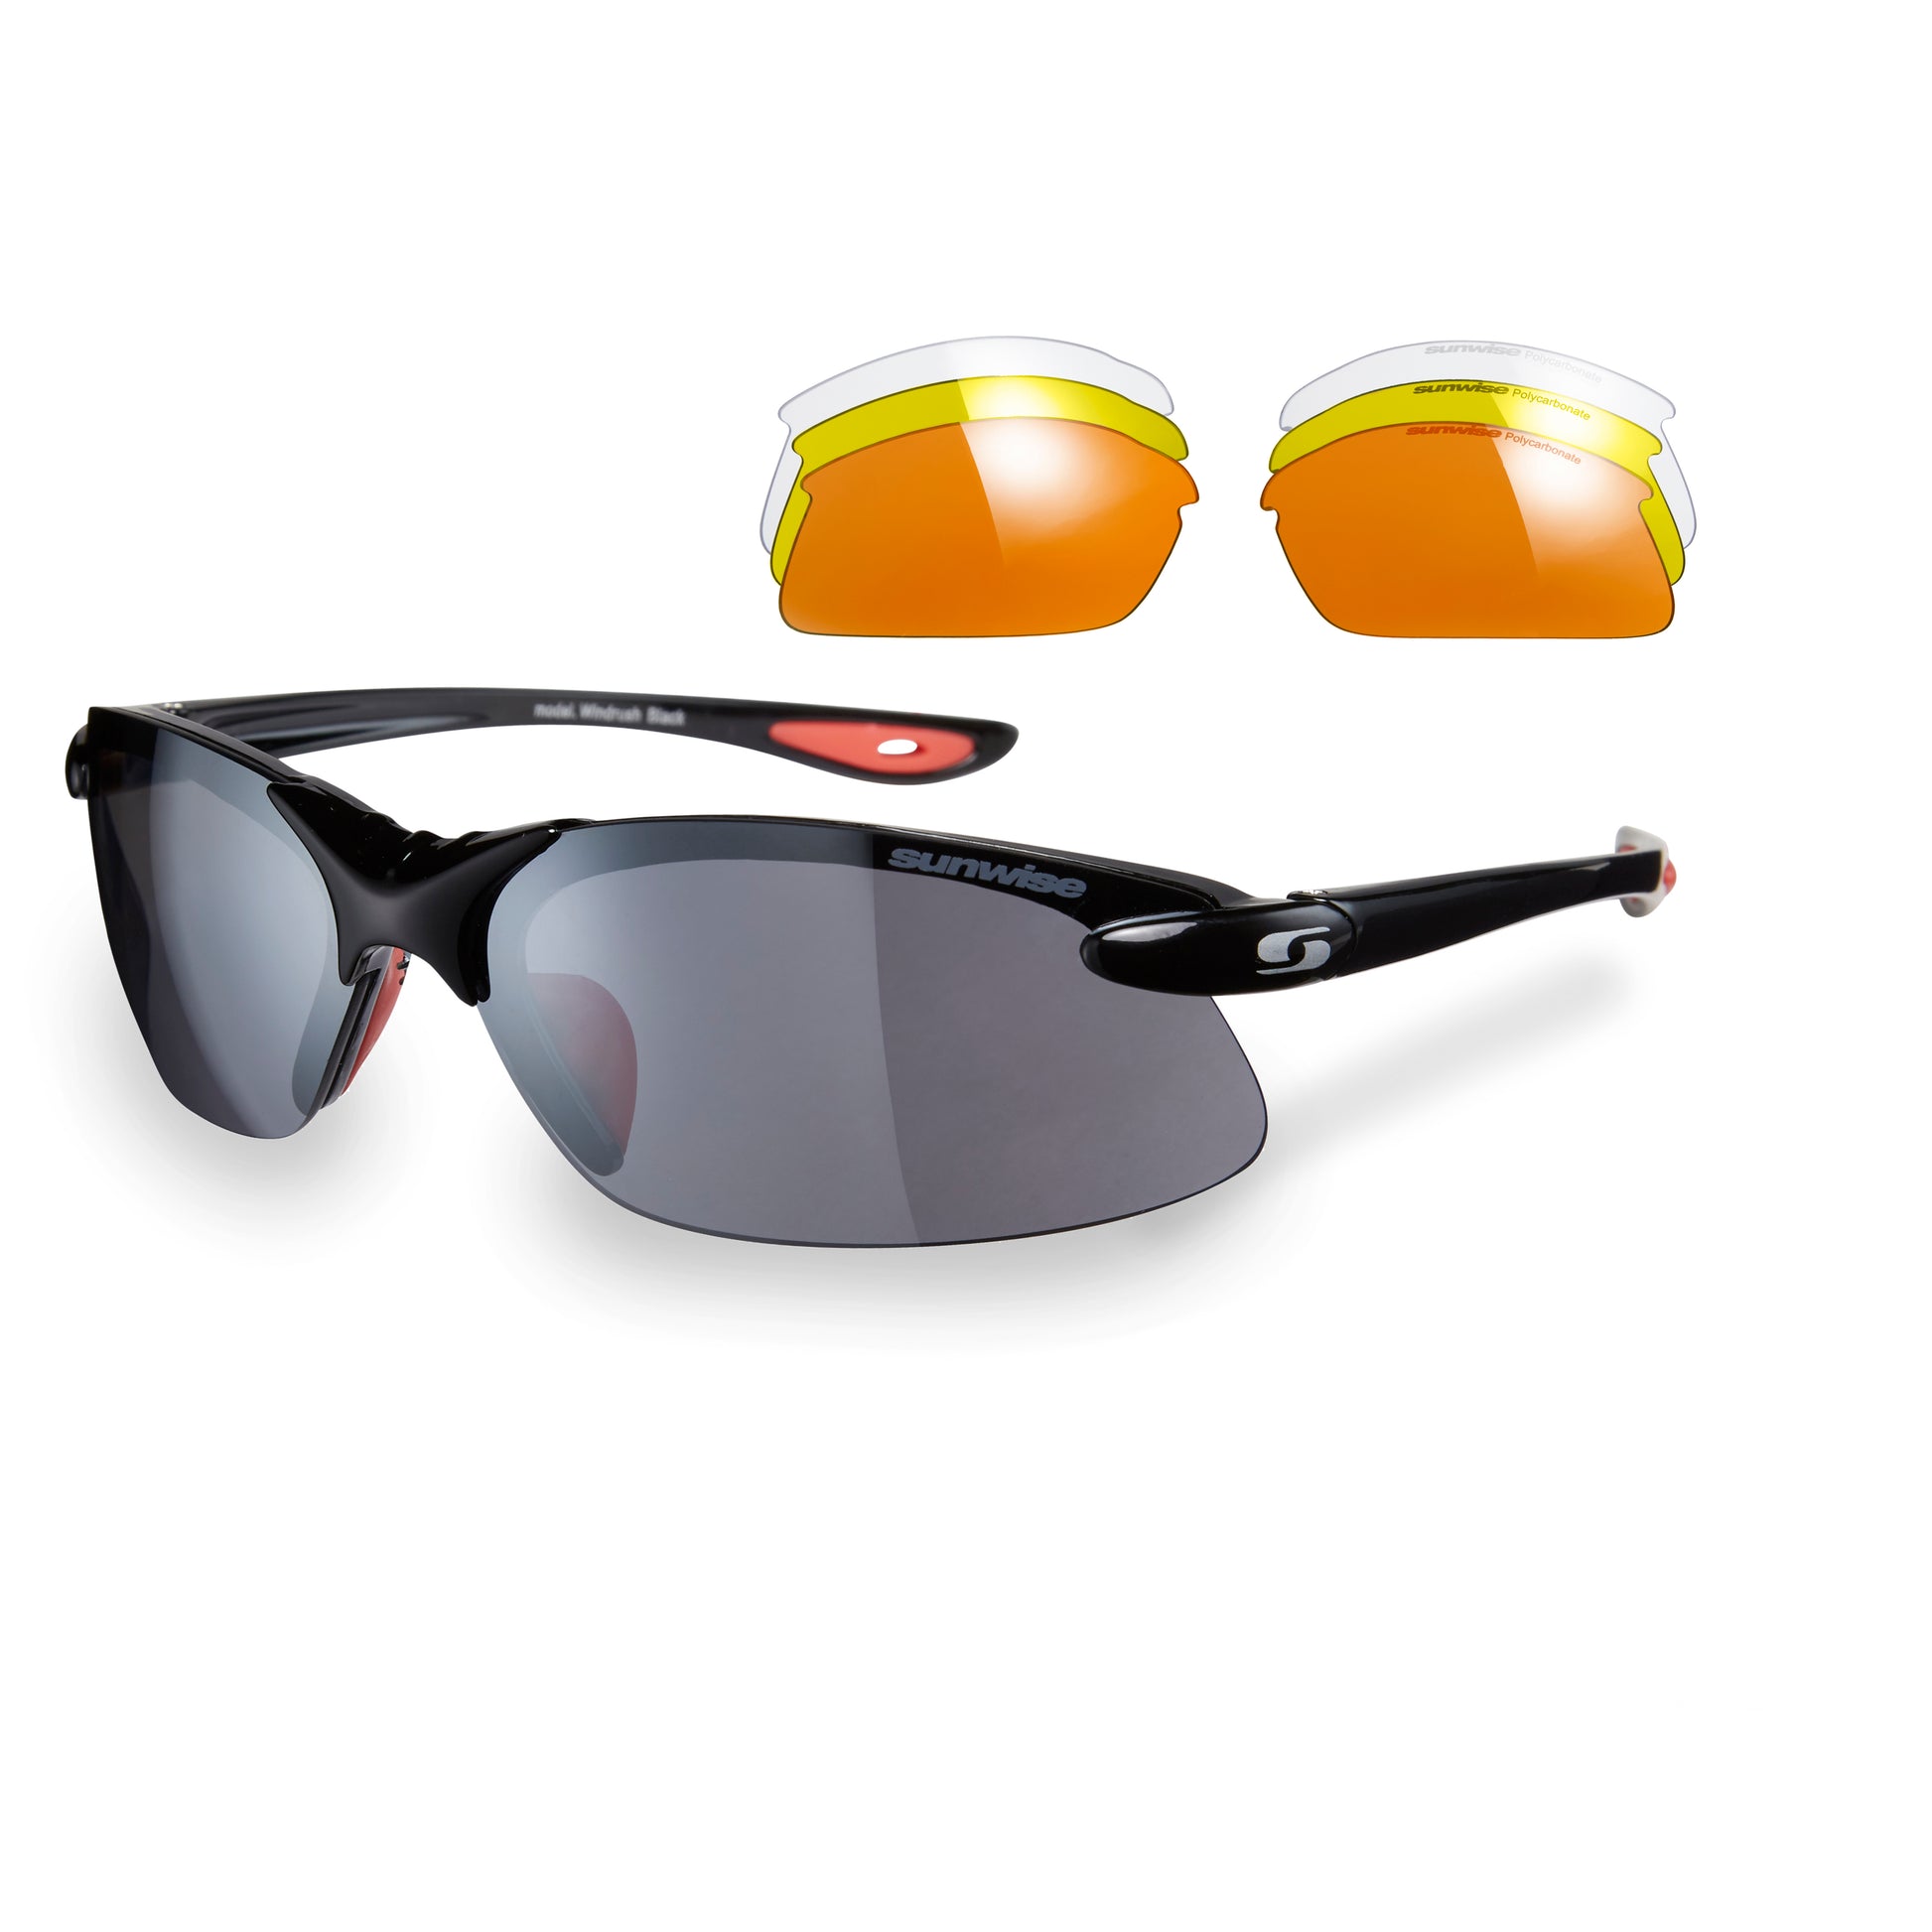 Sunwise sports sunglasses, Windrush, black with additional lenses